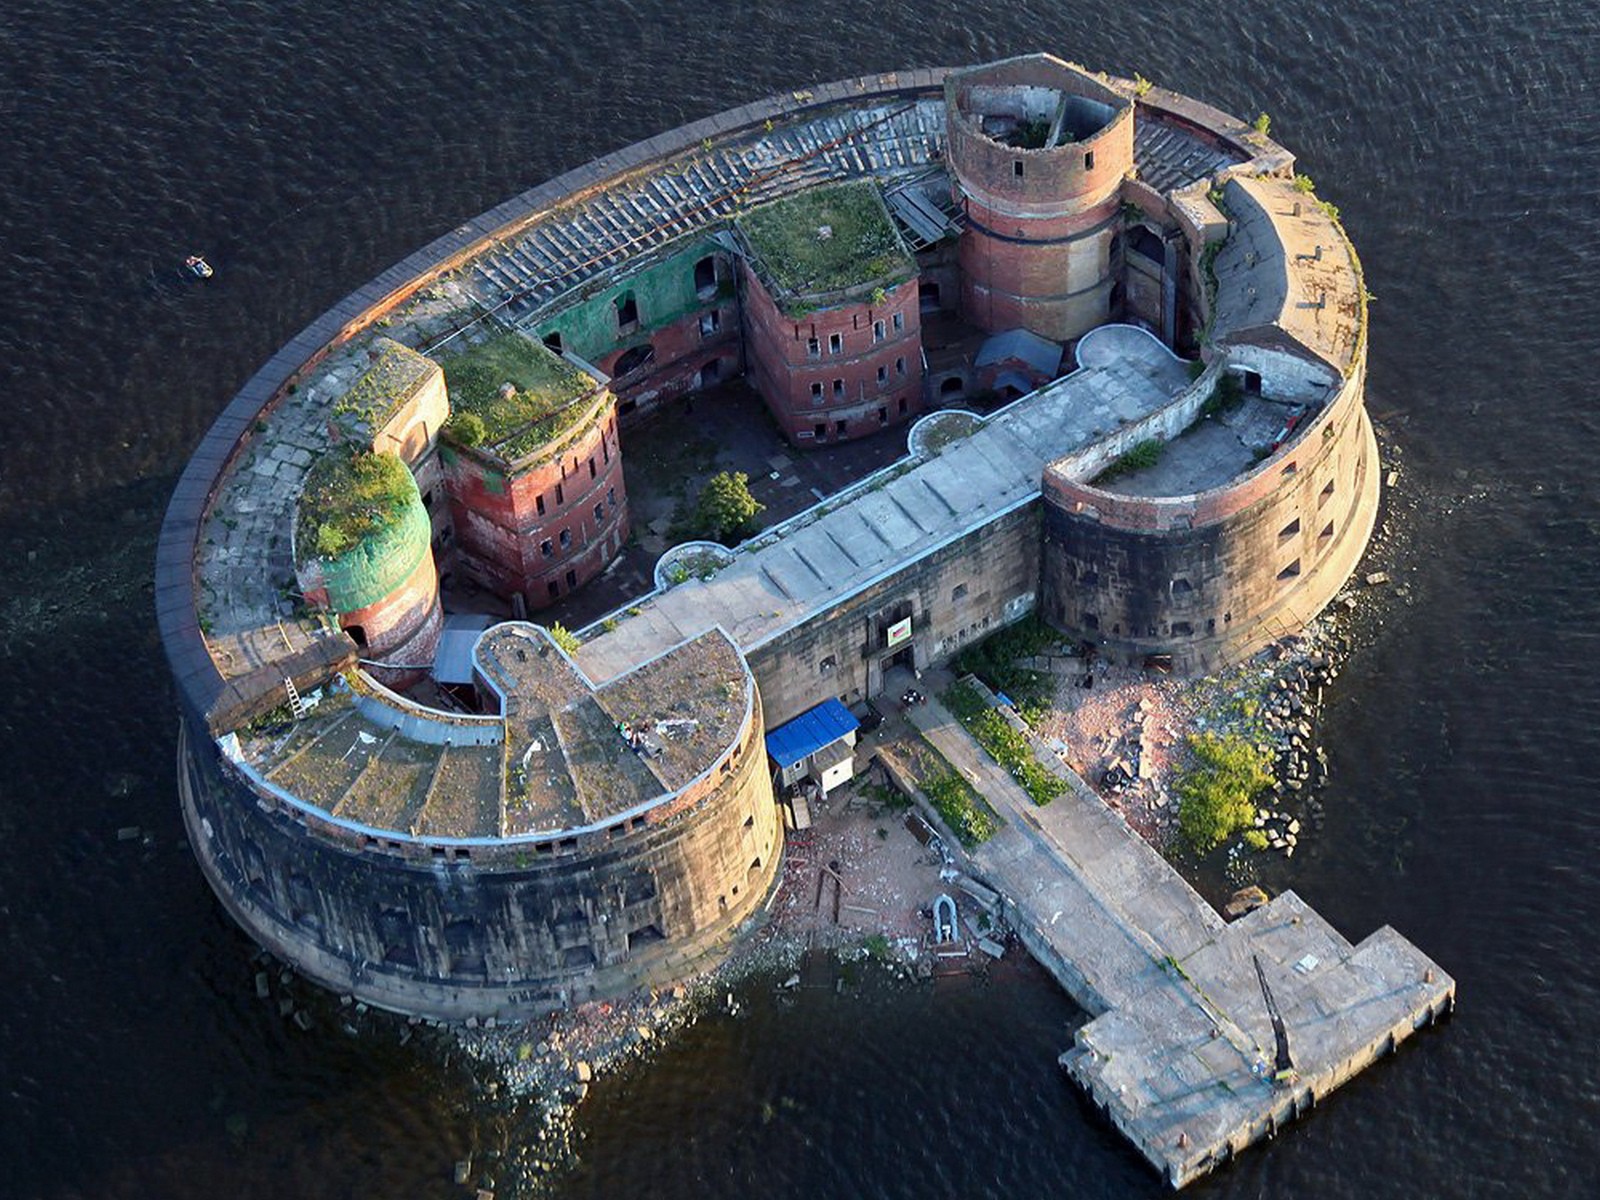 Fort санкт петербург